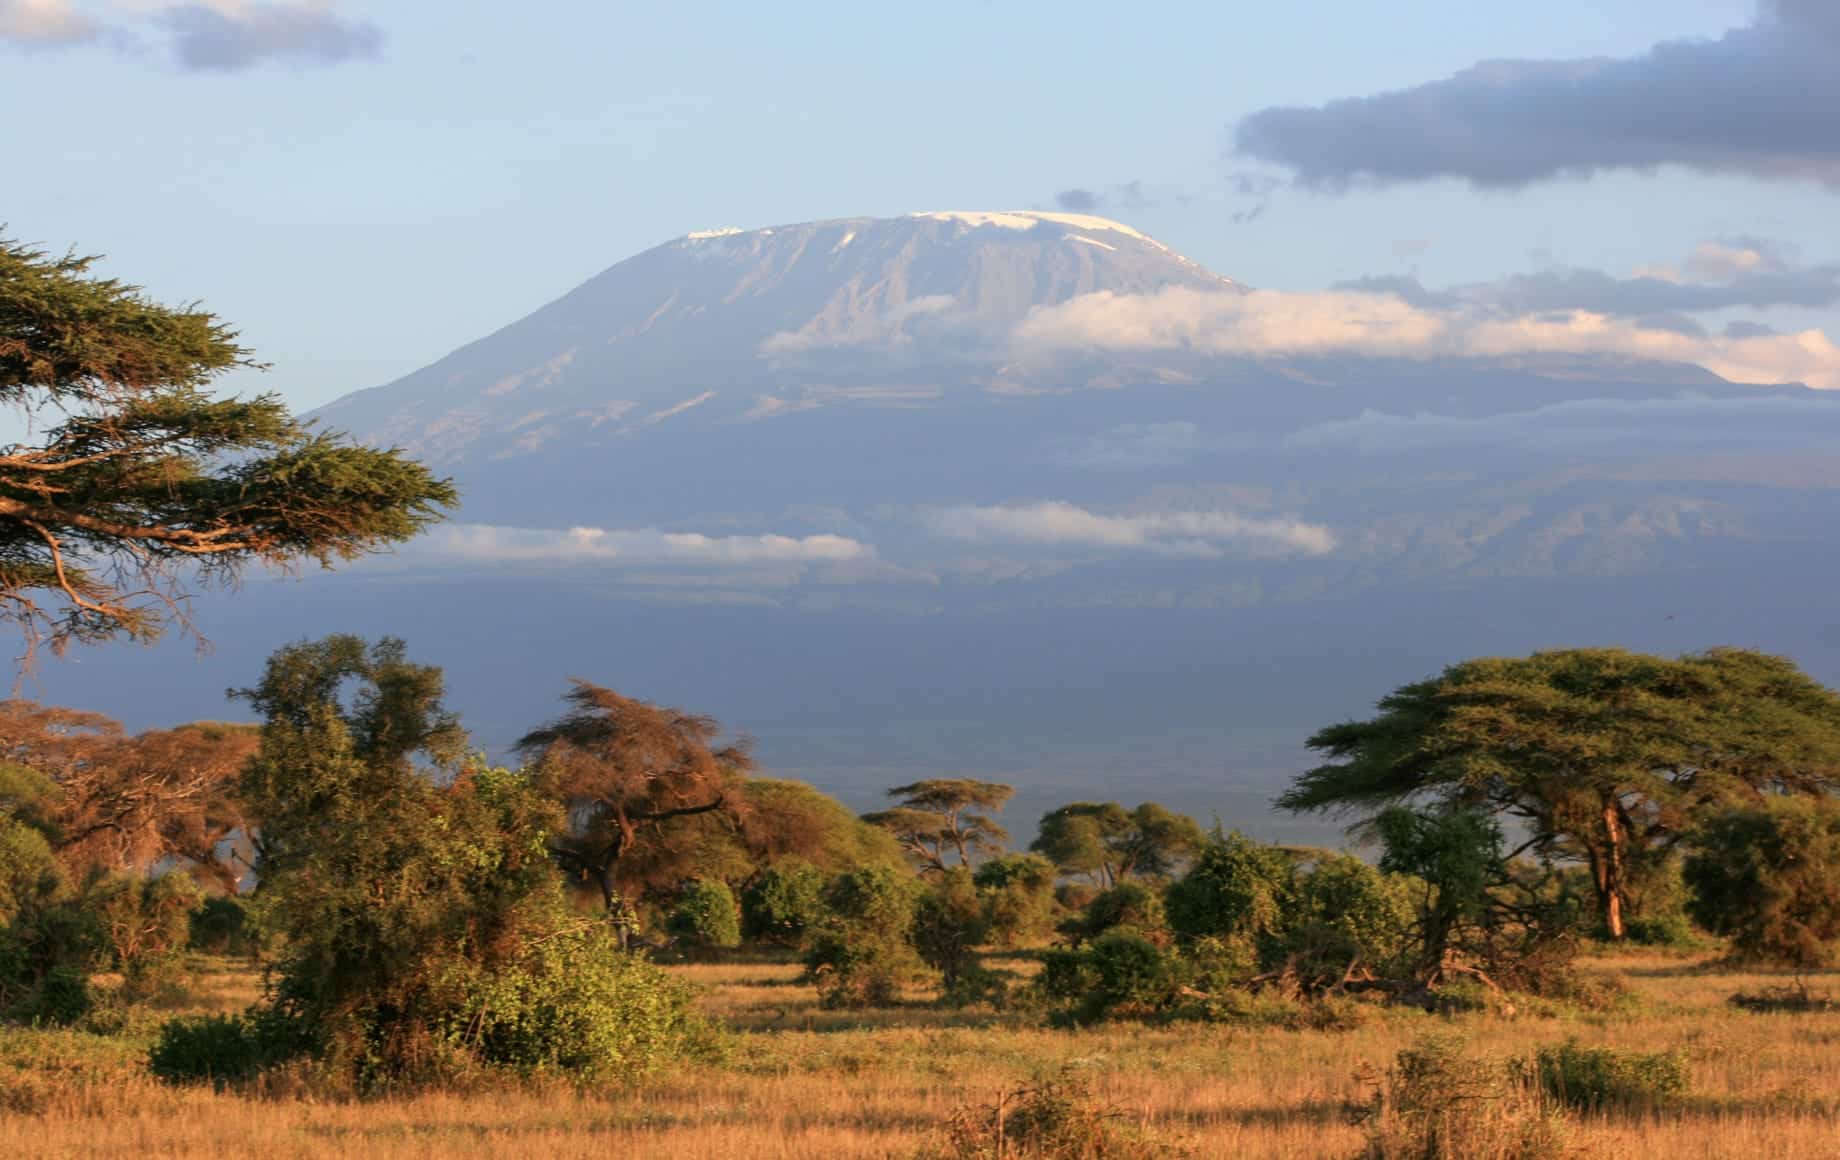 Mount Kilimanjaro Climb Peak Experience